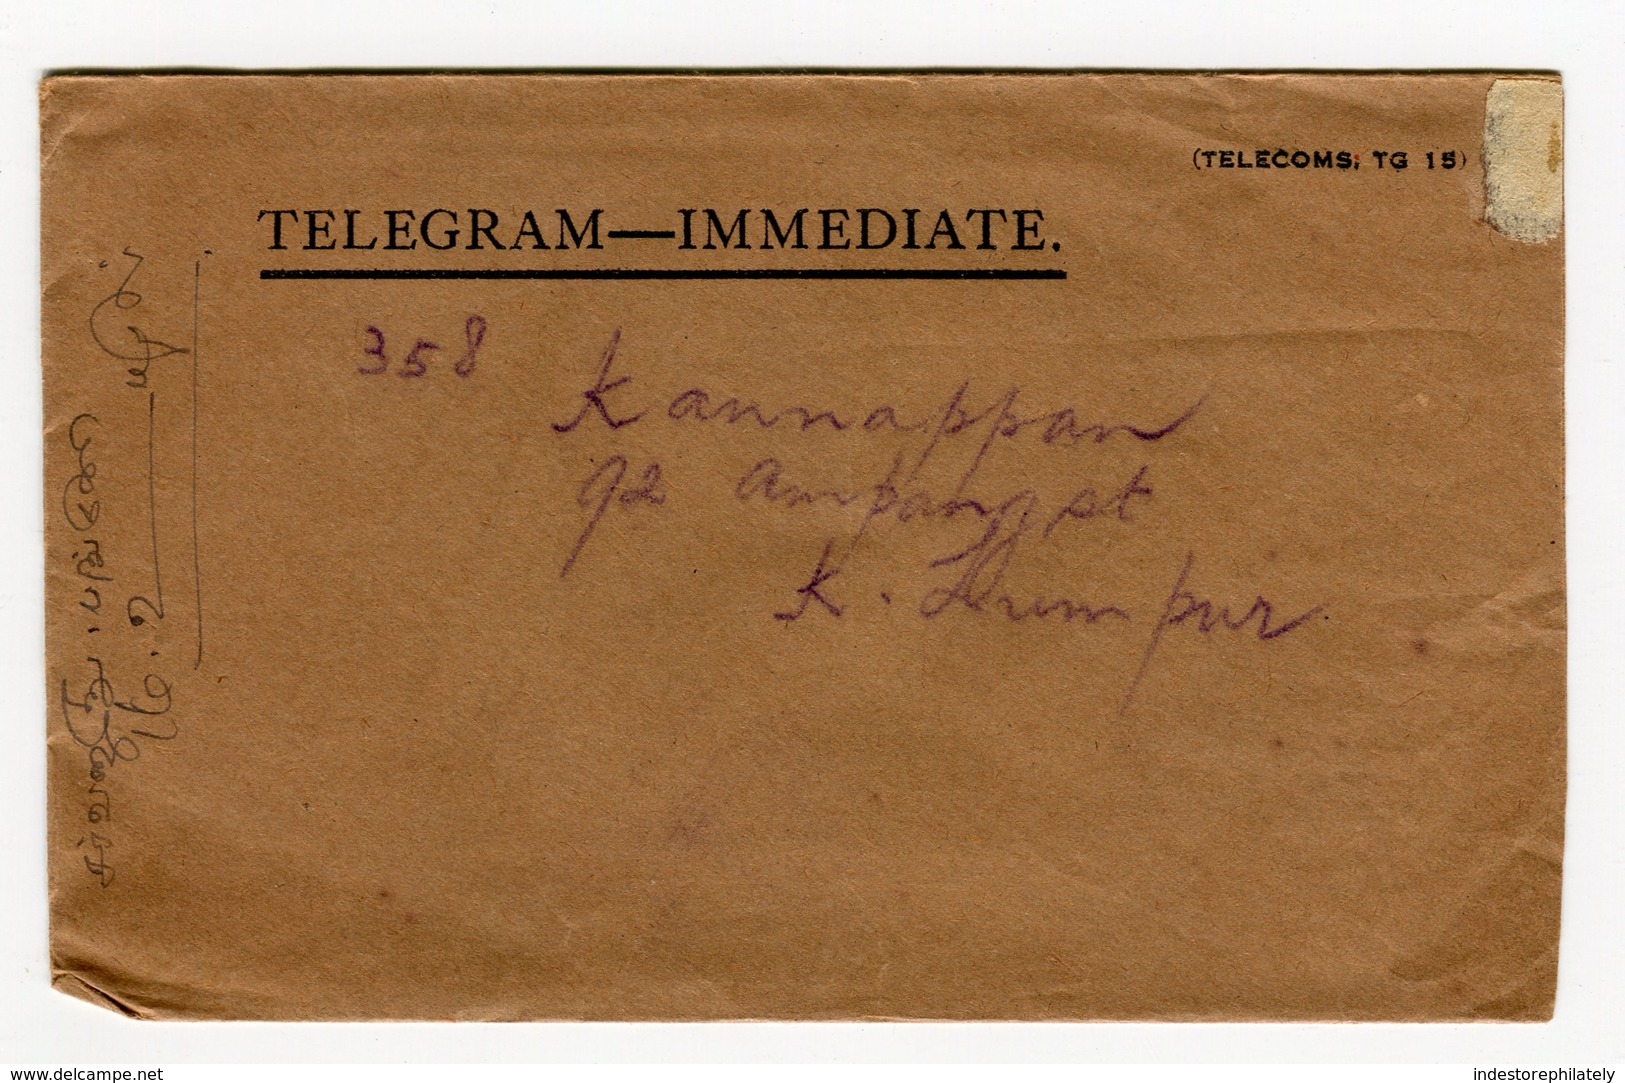 MALAYA Kuala Lumpur Telegram, Telegraph Office Postmark 10 Mar 1948 (M6) - Malaya (British Military Administration)